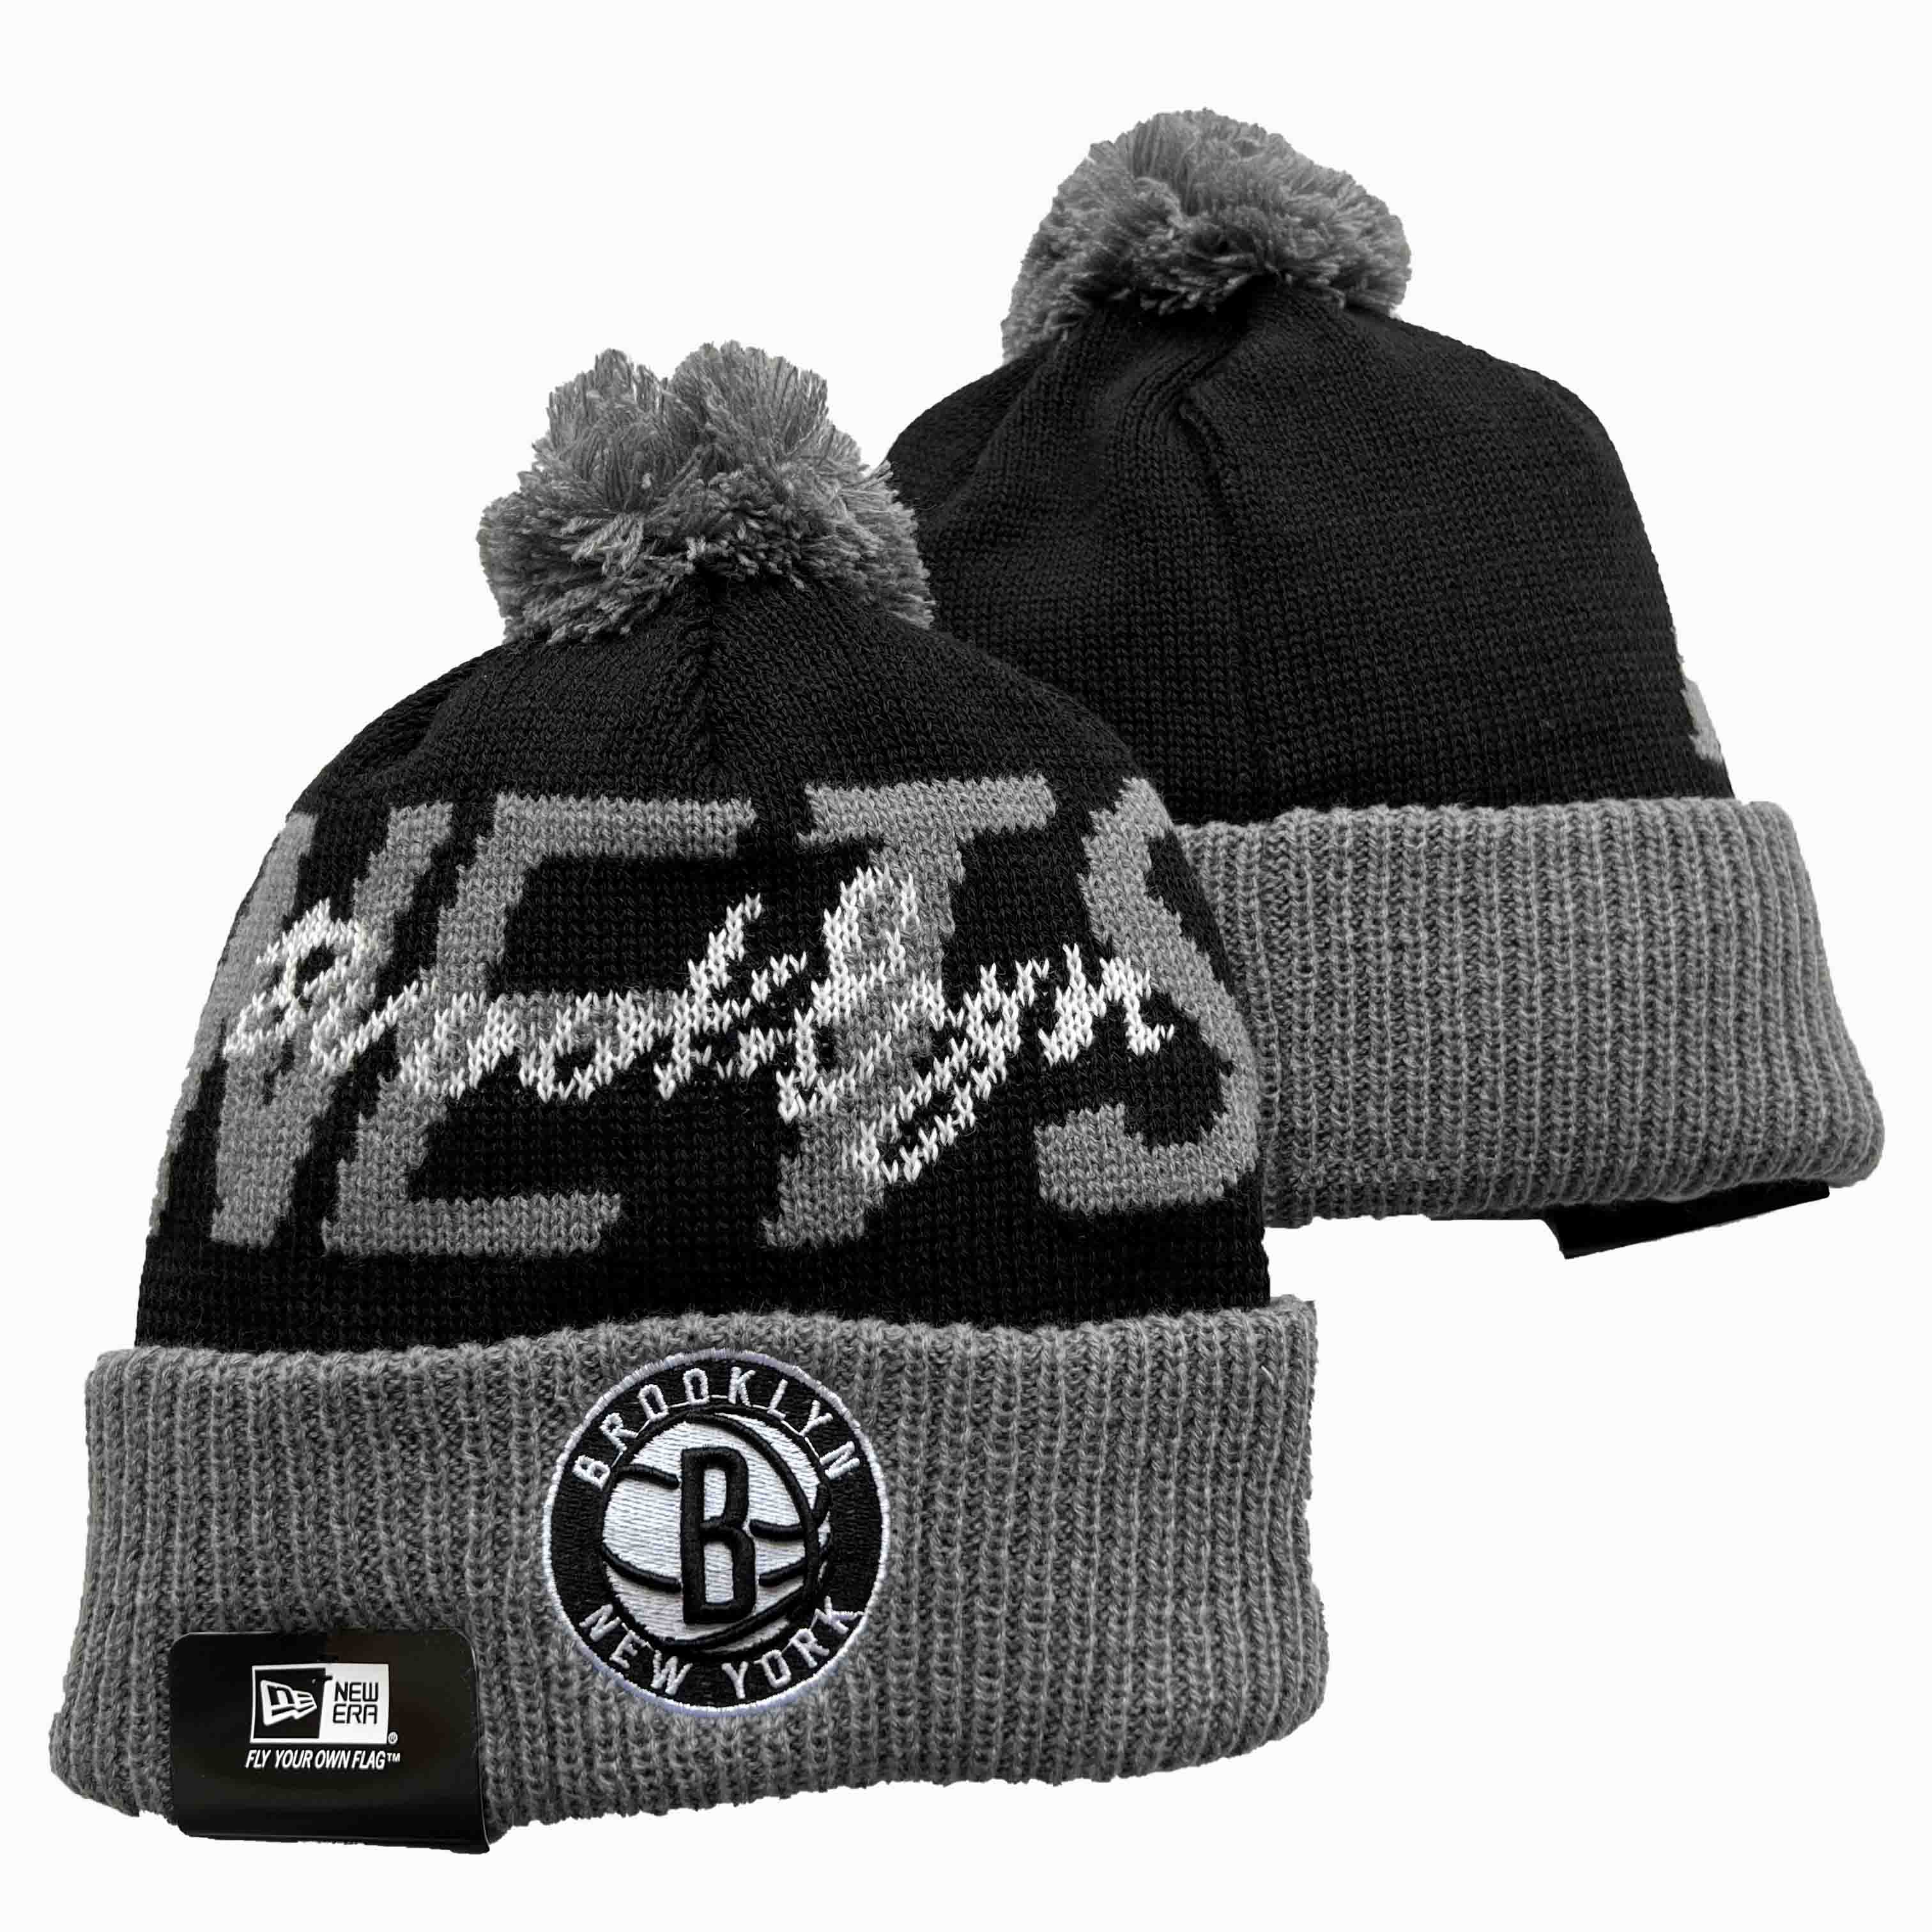 NBA Brooklyn Nets Beanies Knit Hats-YD482